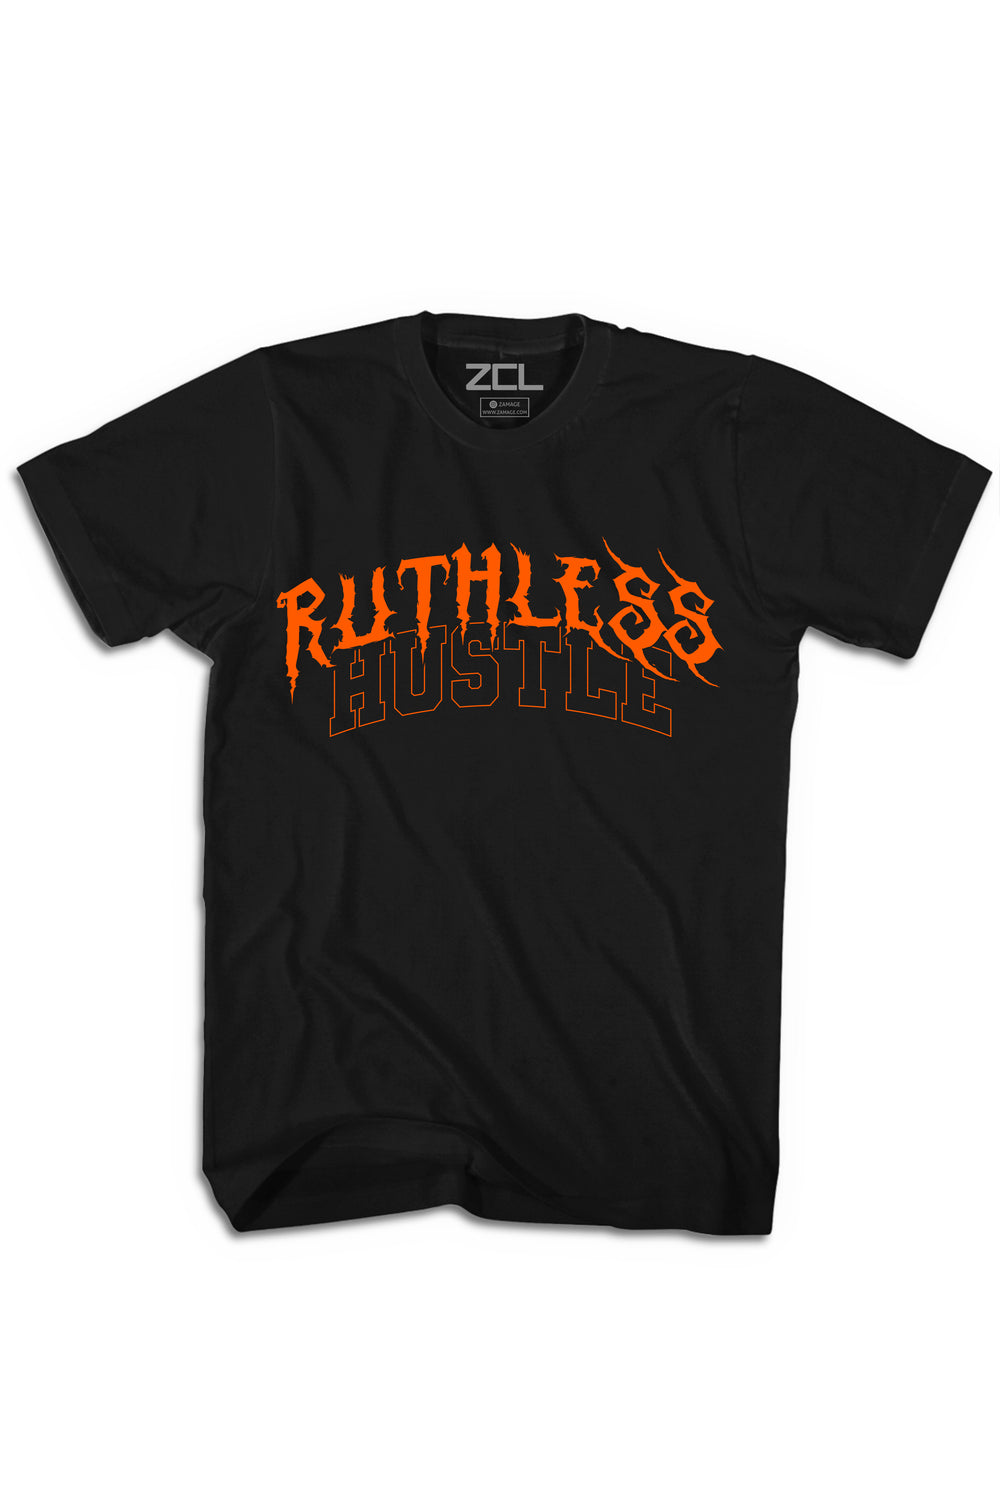 Ruthless Hustle Tee (Orange Logo)